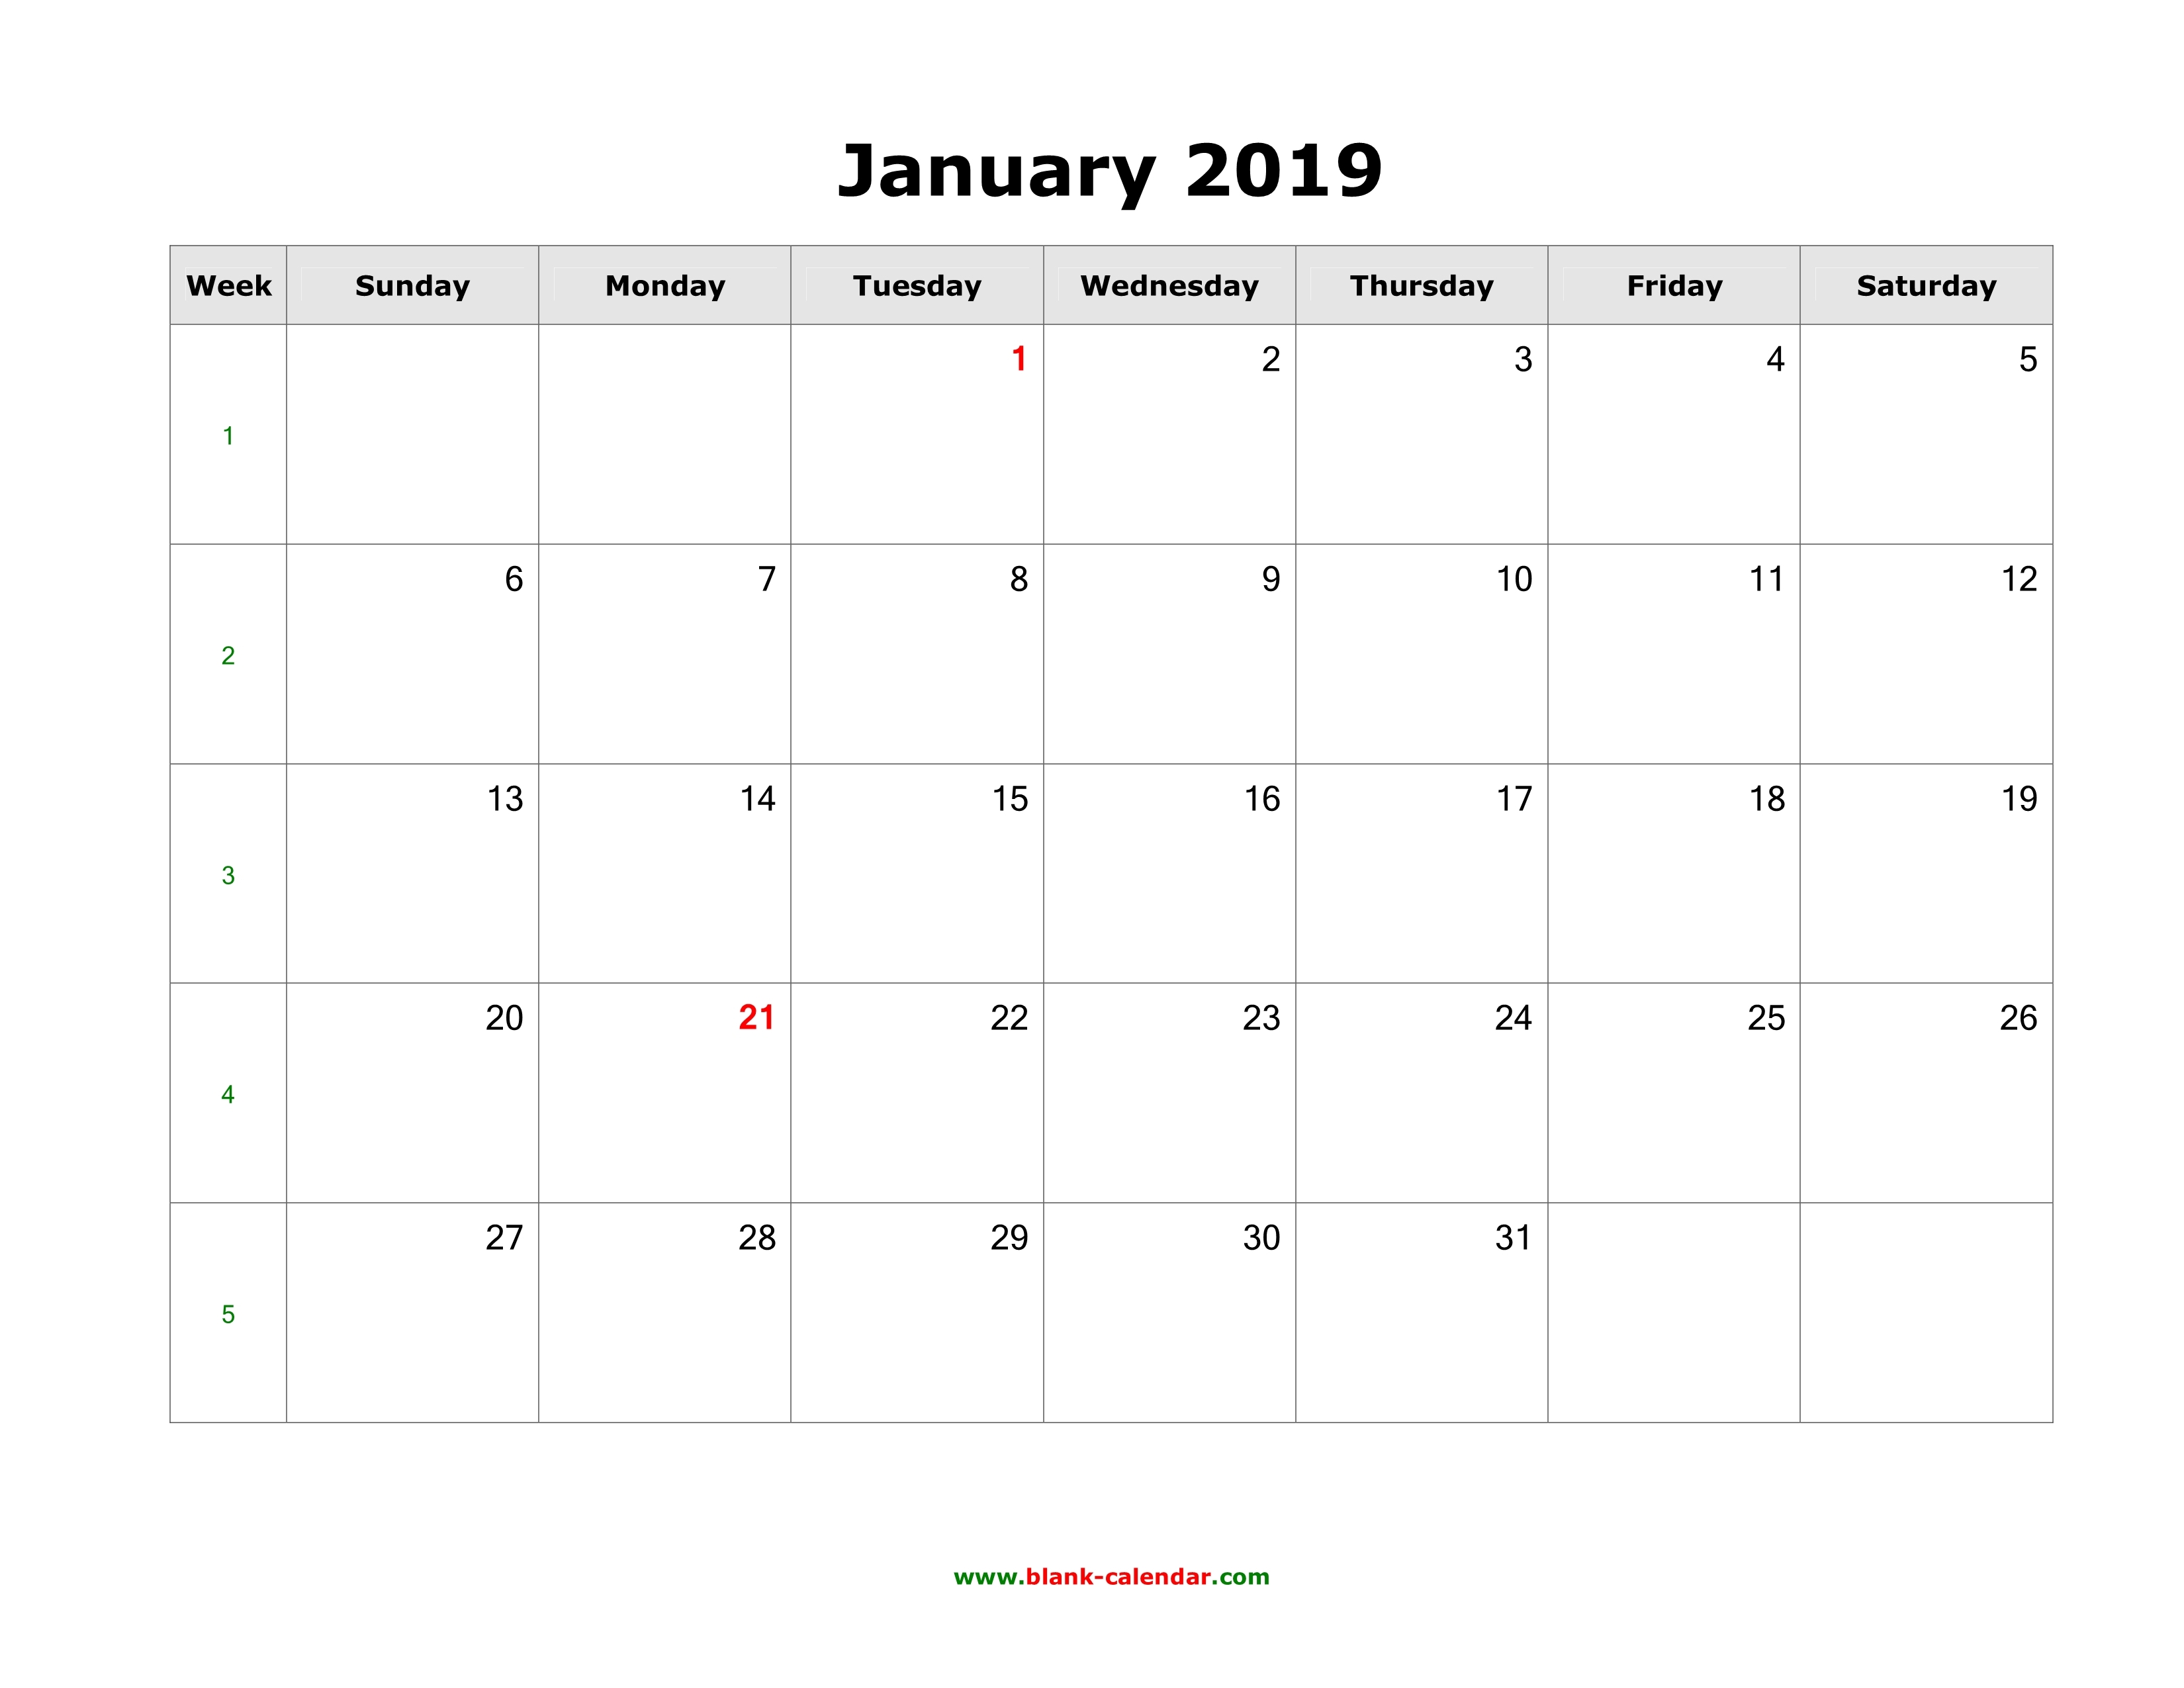 january-2019-blank-calendar-qualads